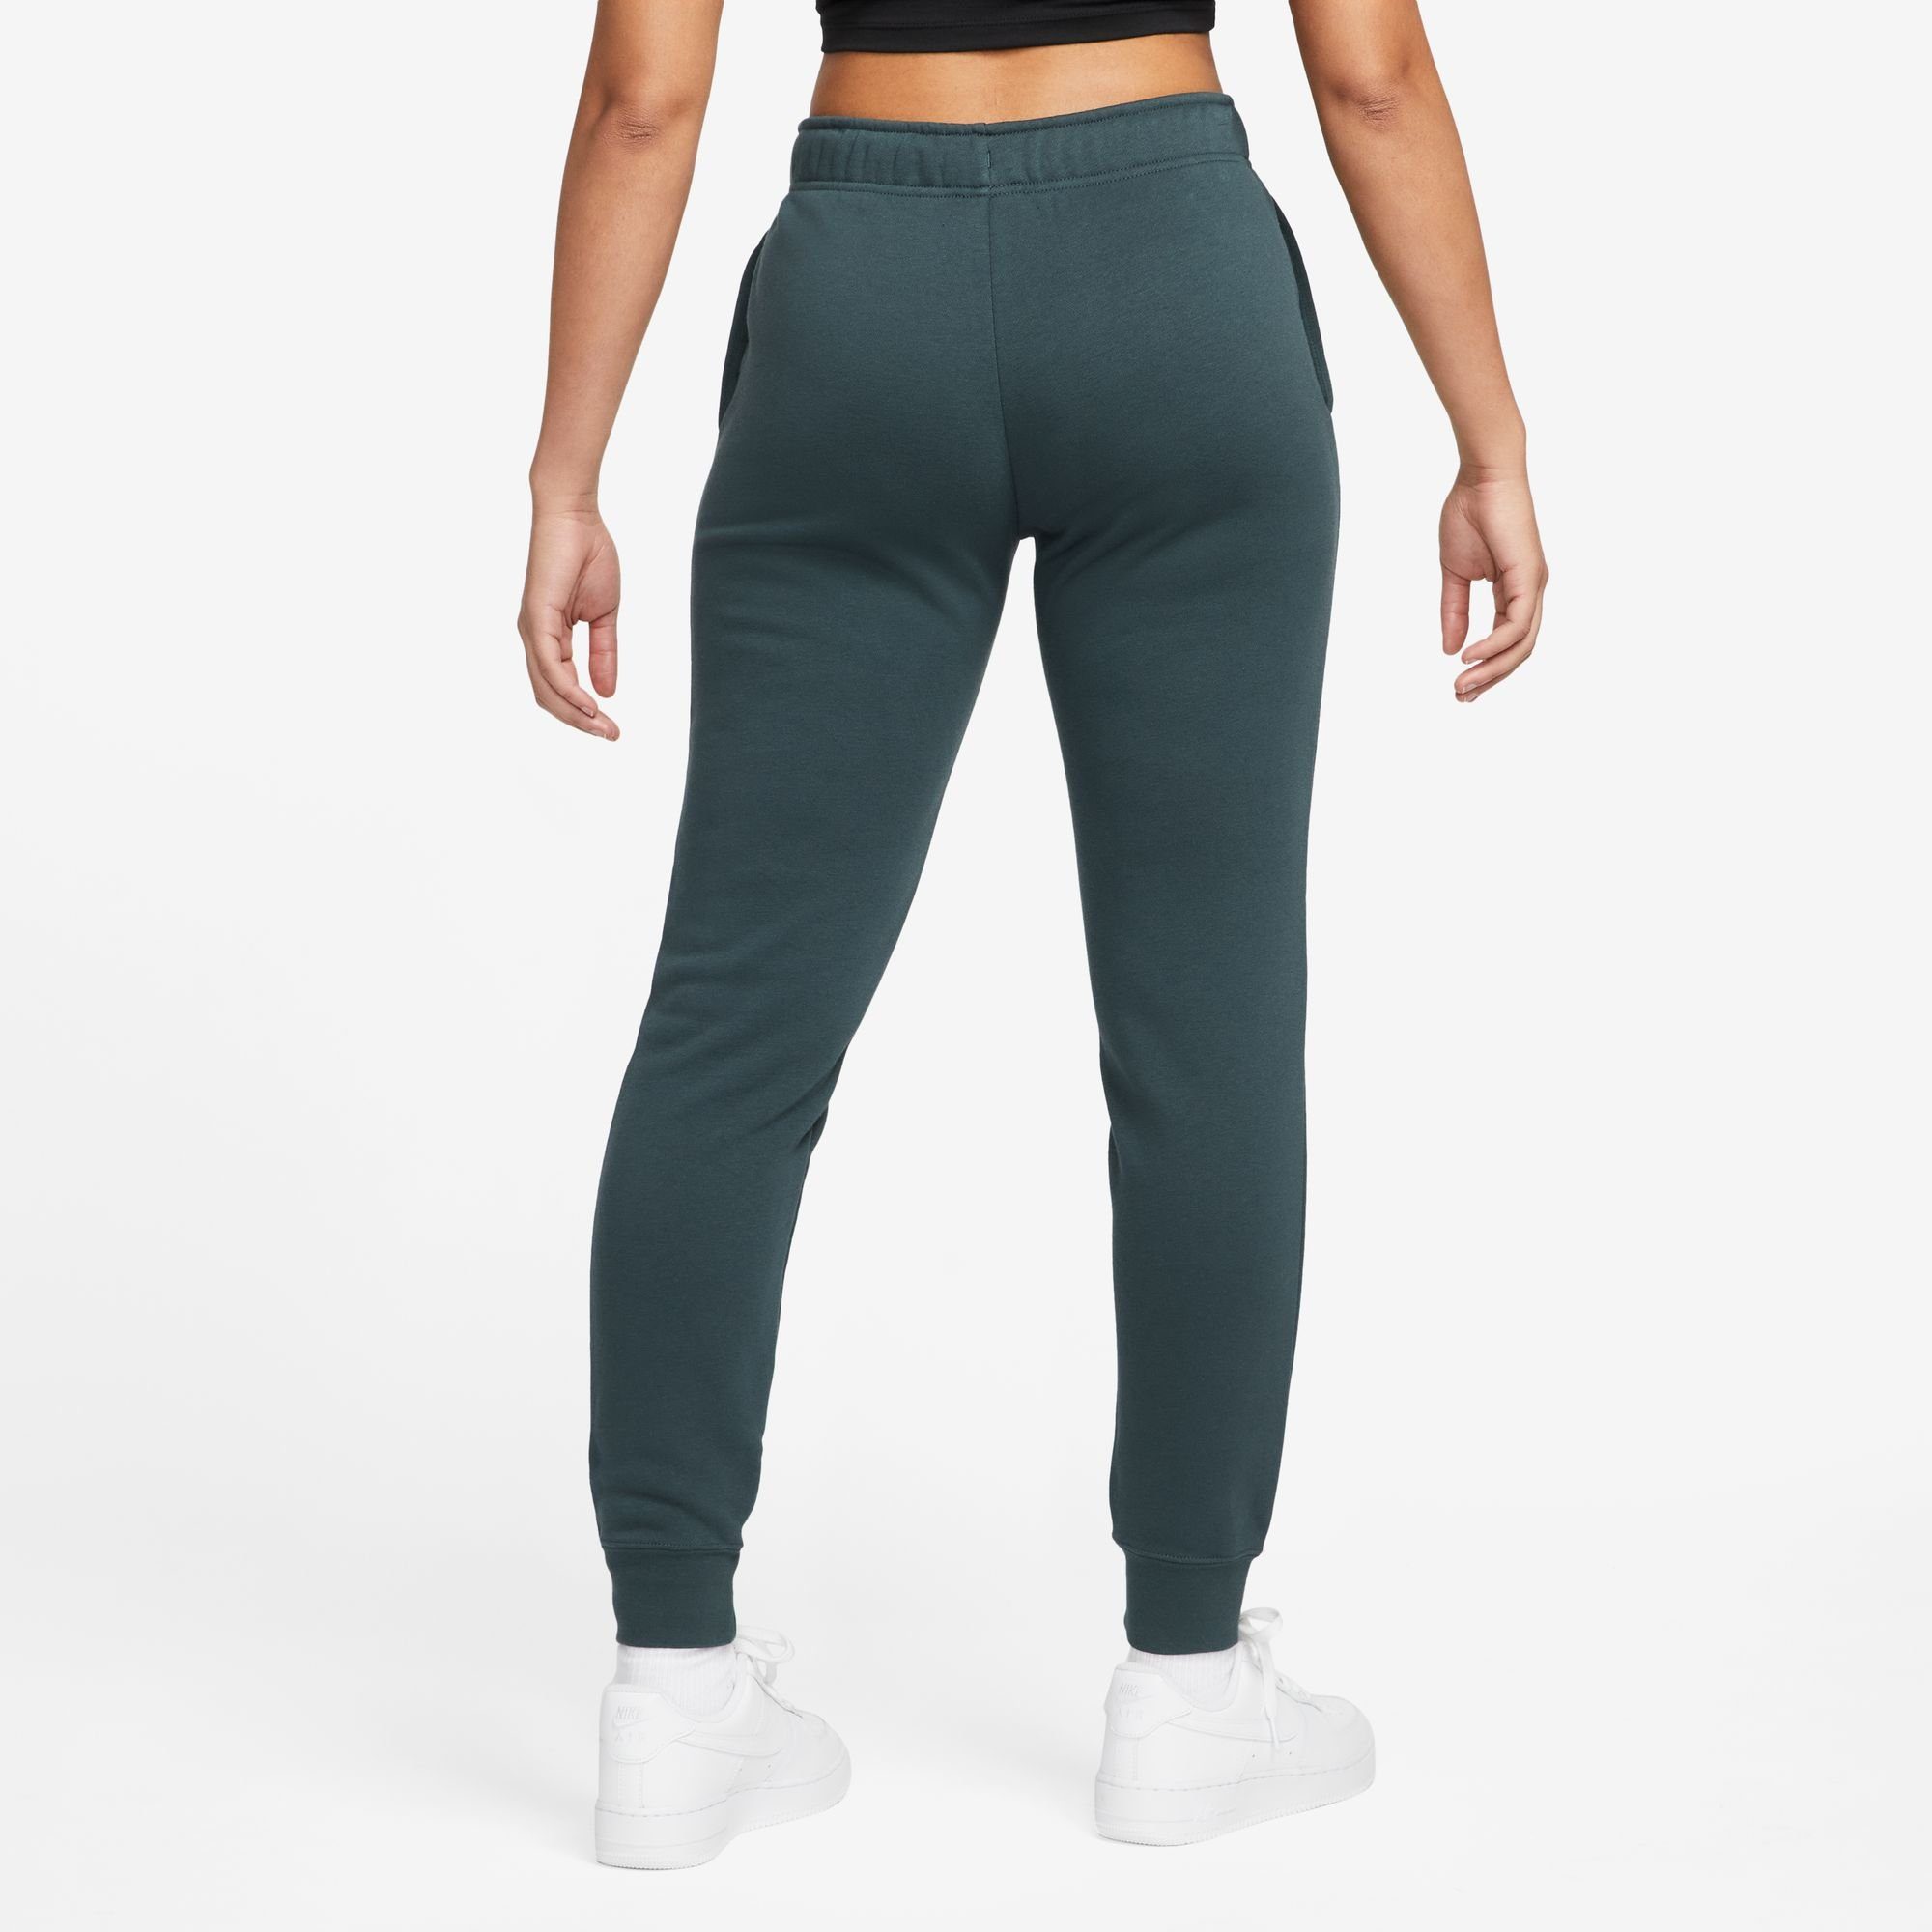 OTTO | kaufen Damen online Jogginghosen Grüne Nike